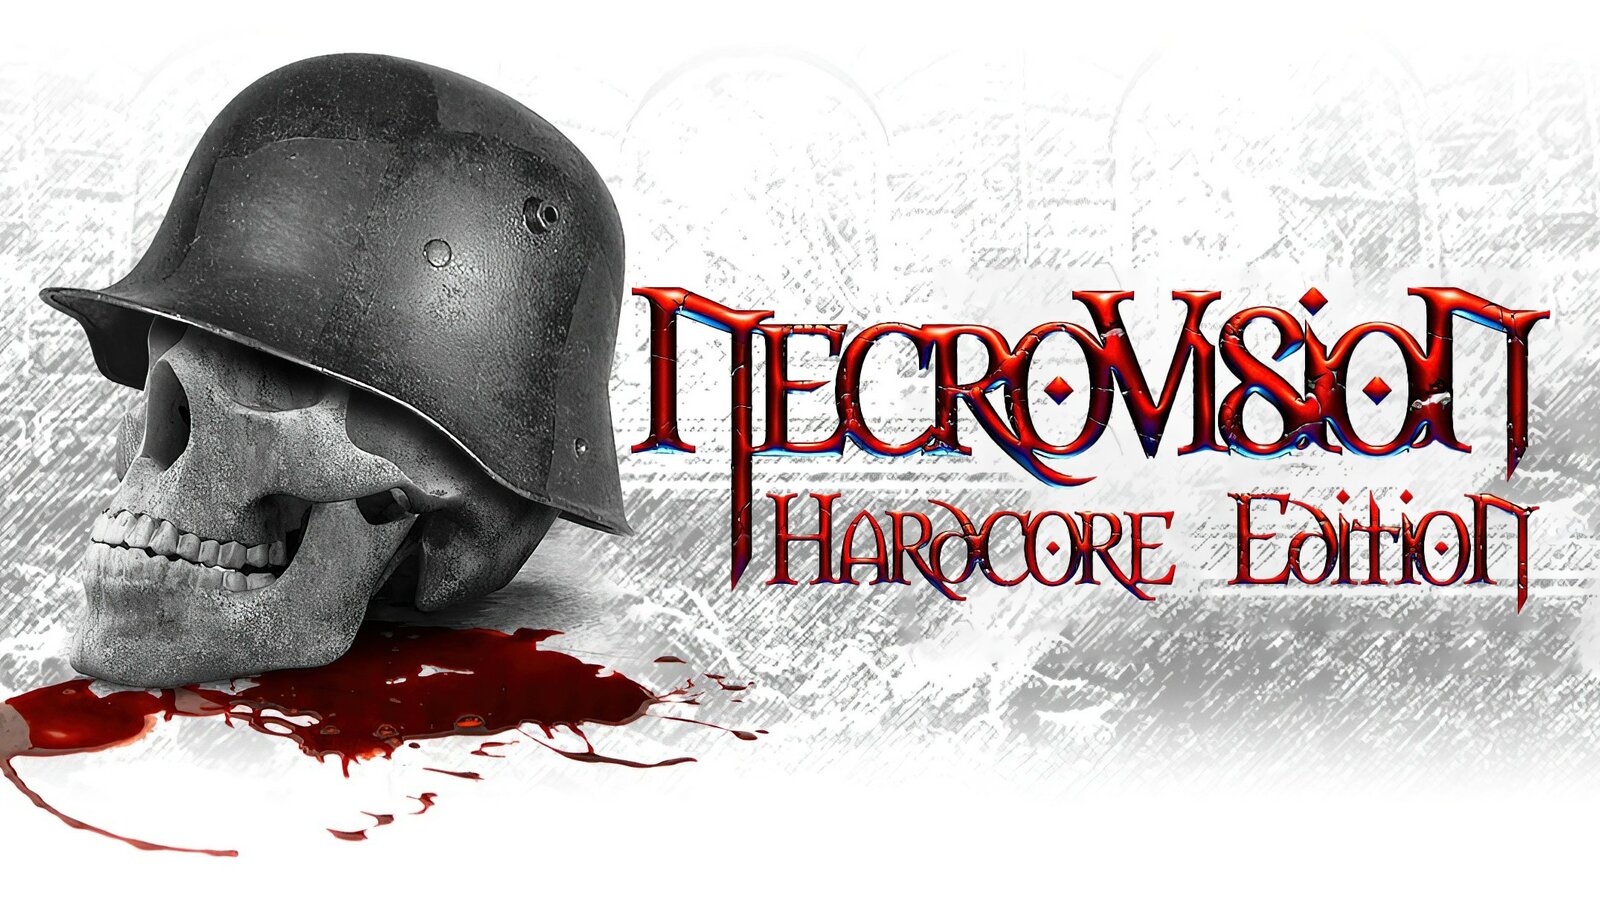 NecroVisioN - Hardcore Edition